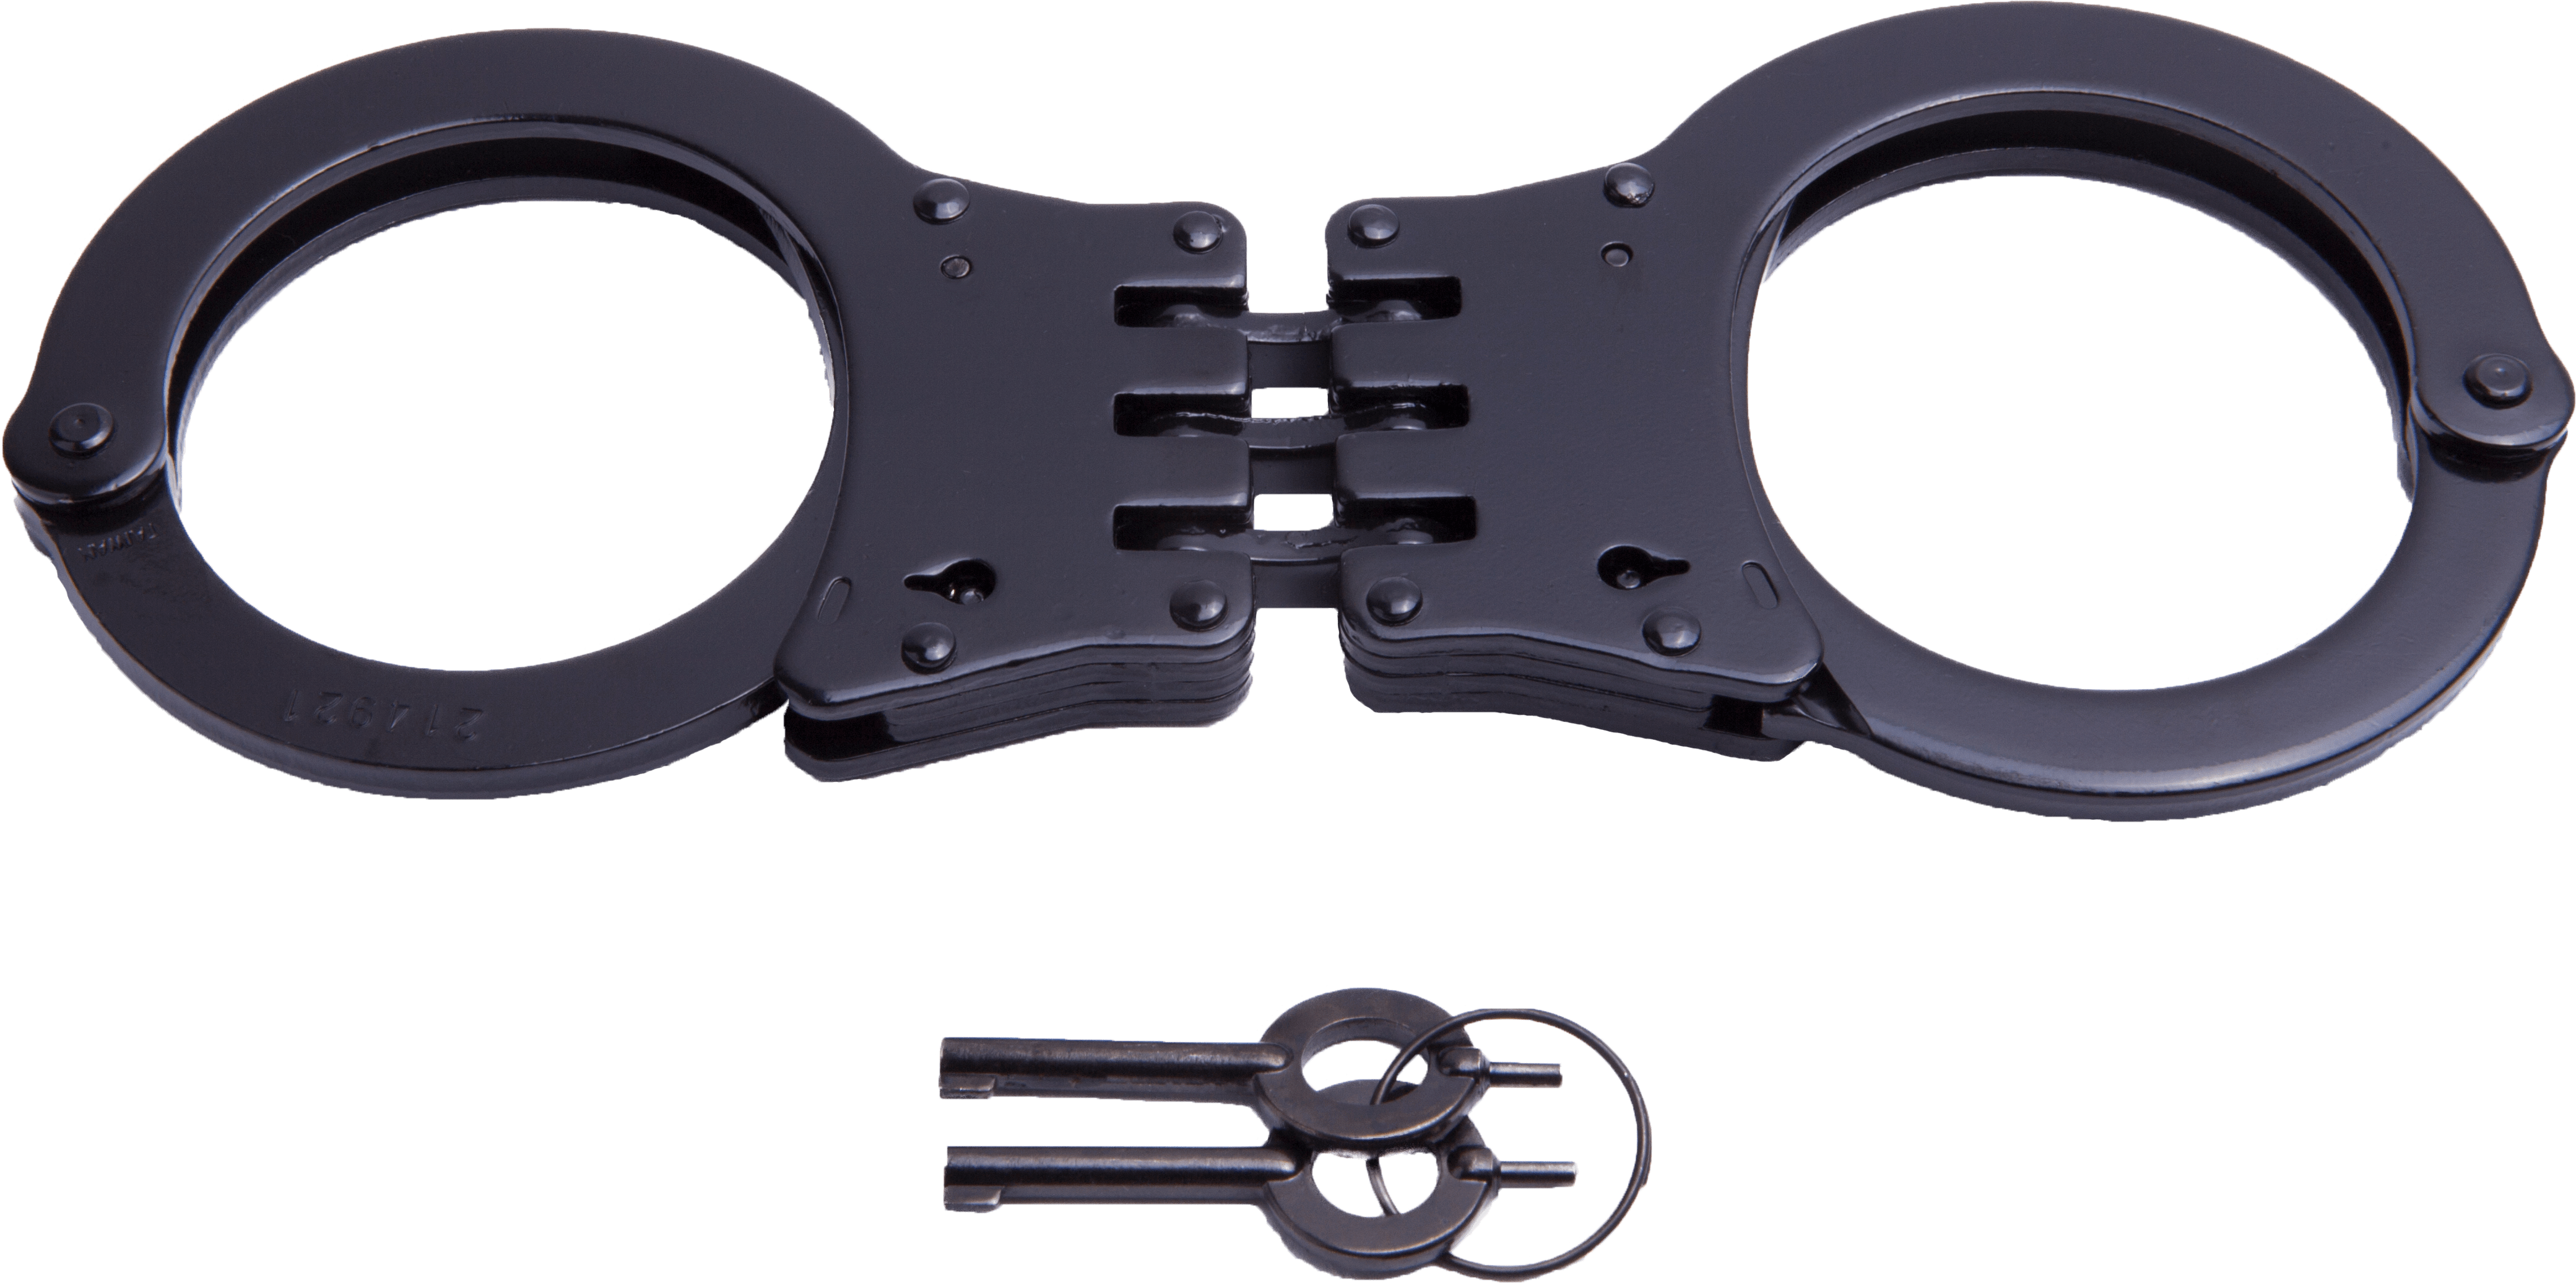 UZI Hinged Double Lock Handcuff - Black